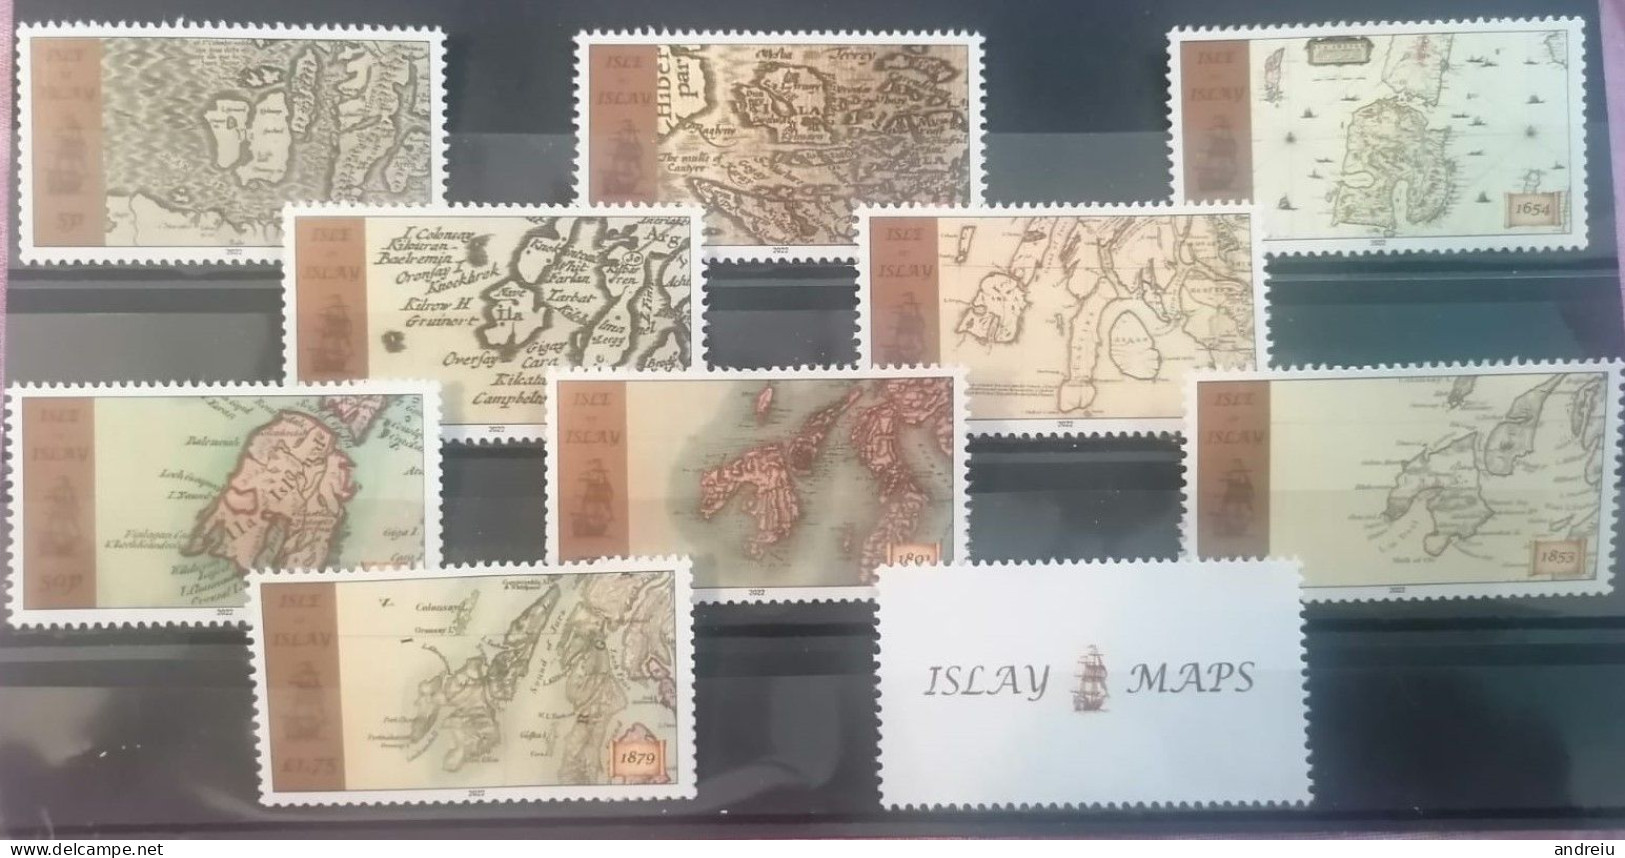 2022 GB Locals: Isle Of Islay - Old Maps Of Islay 9v+label, Geography, Cartes, Karten, Mapas MNH - Eilanden